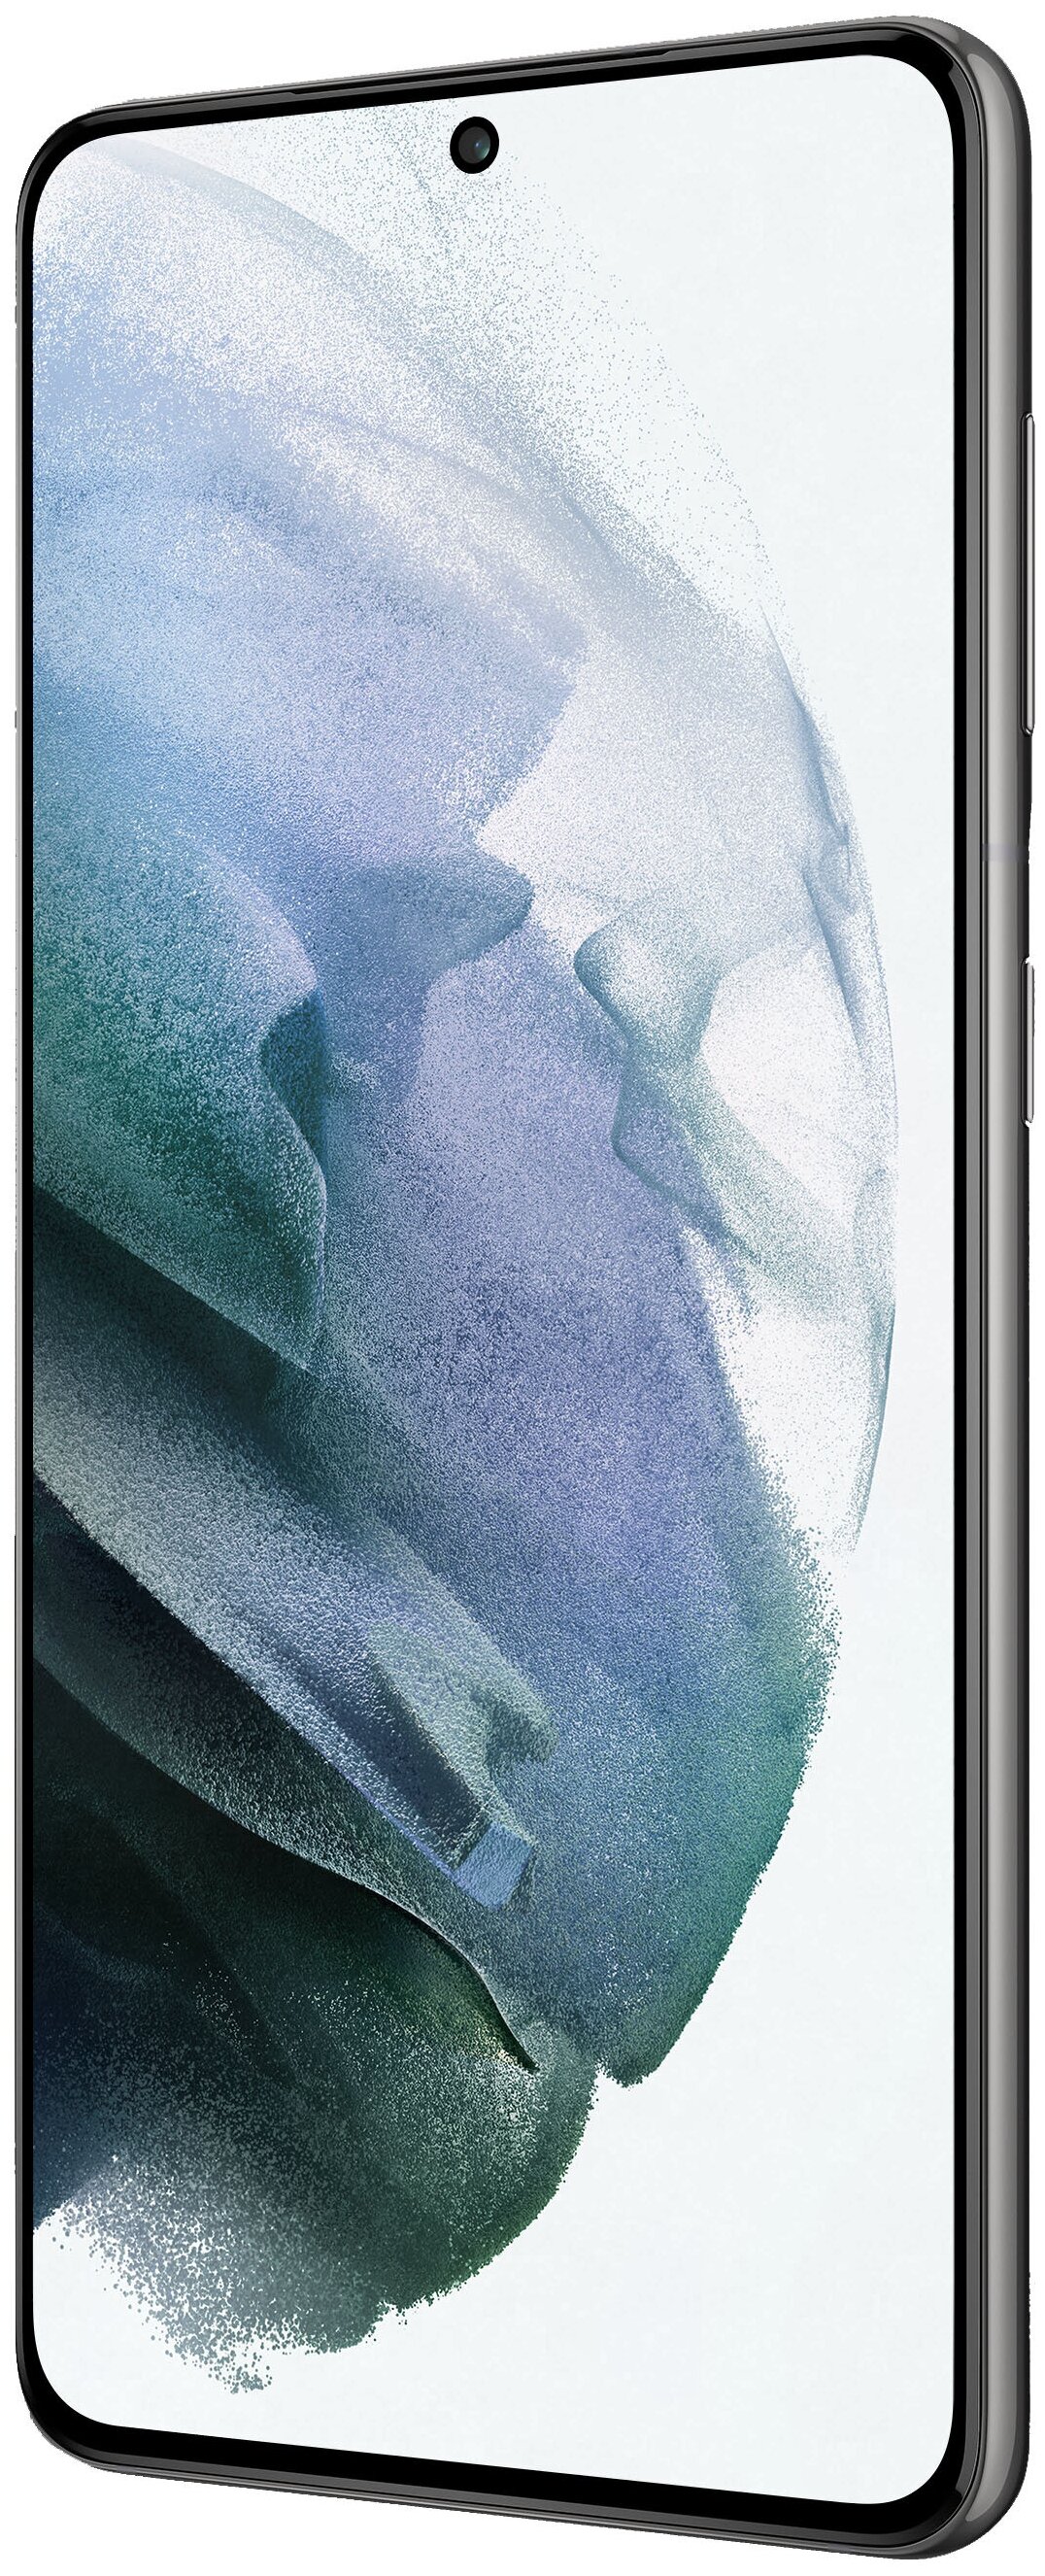 Samsung Galaxy S21 5G (SM-G991B) - процессор: Samsung Exynos 2100